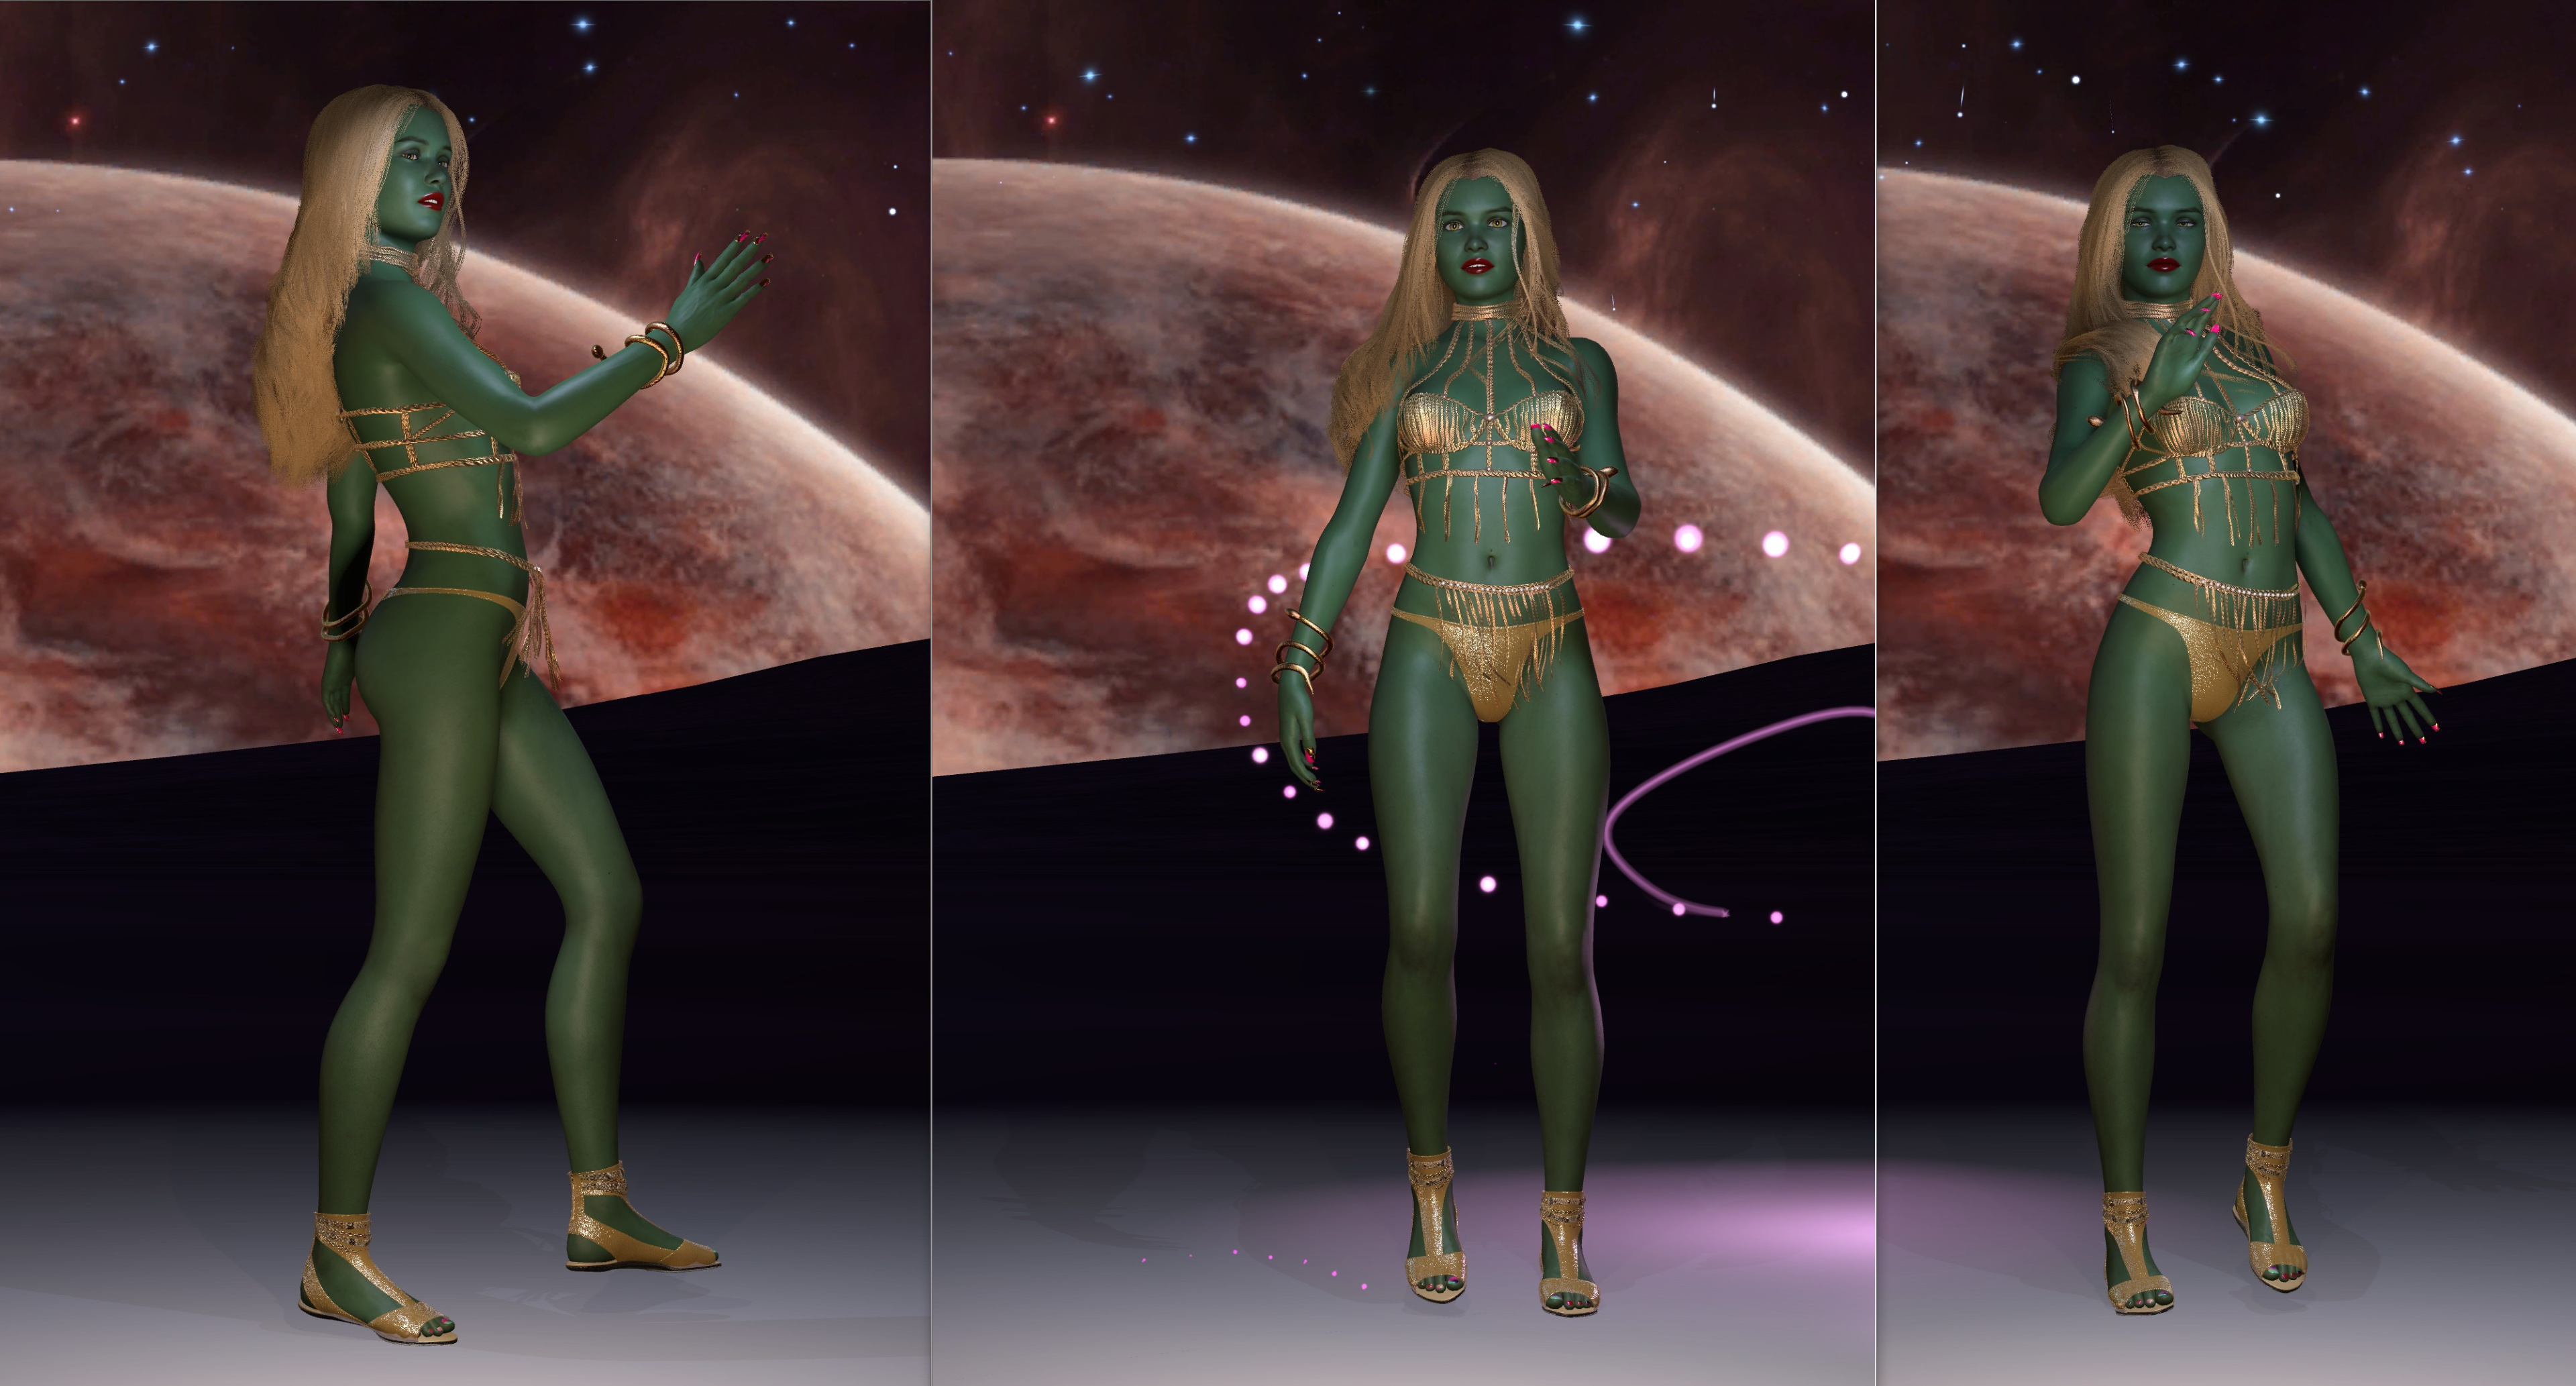 20230504-green-dancer-collage.jpg